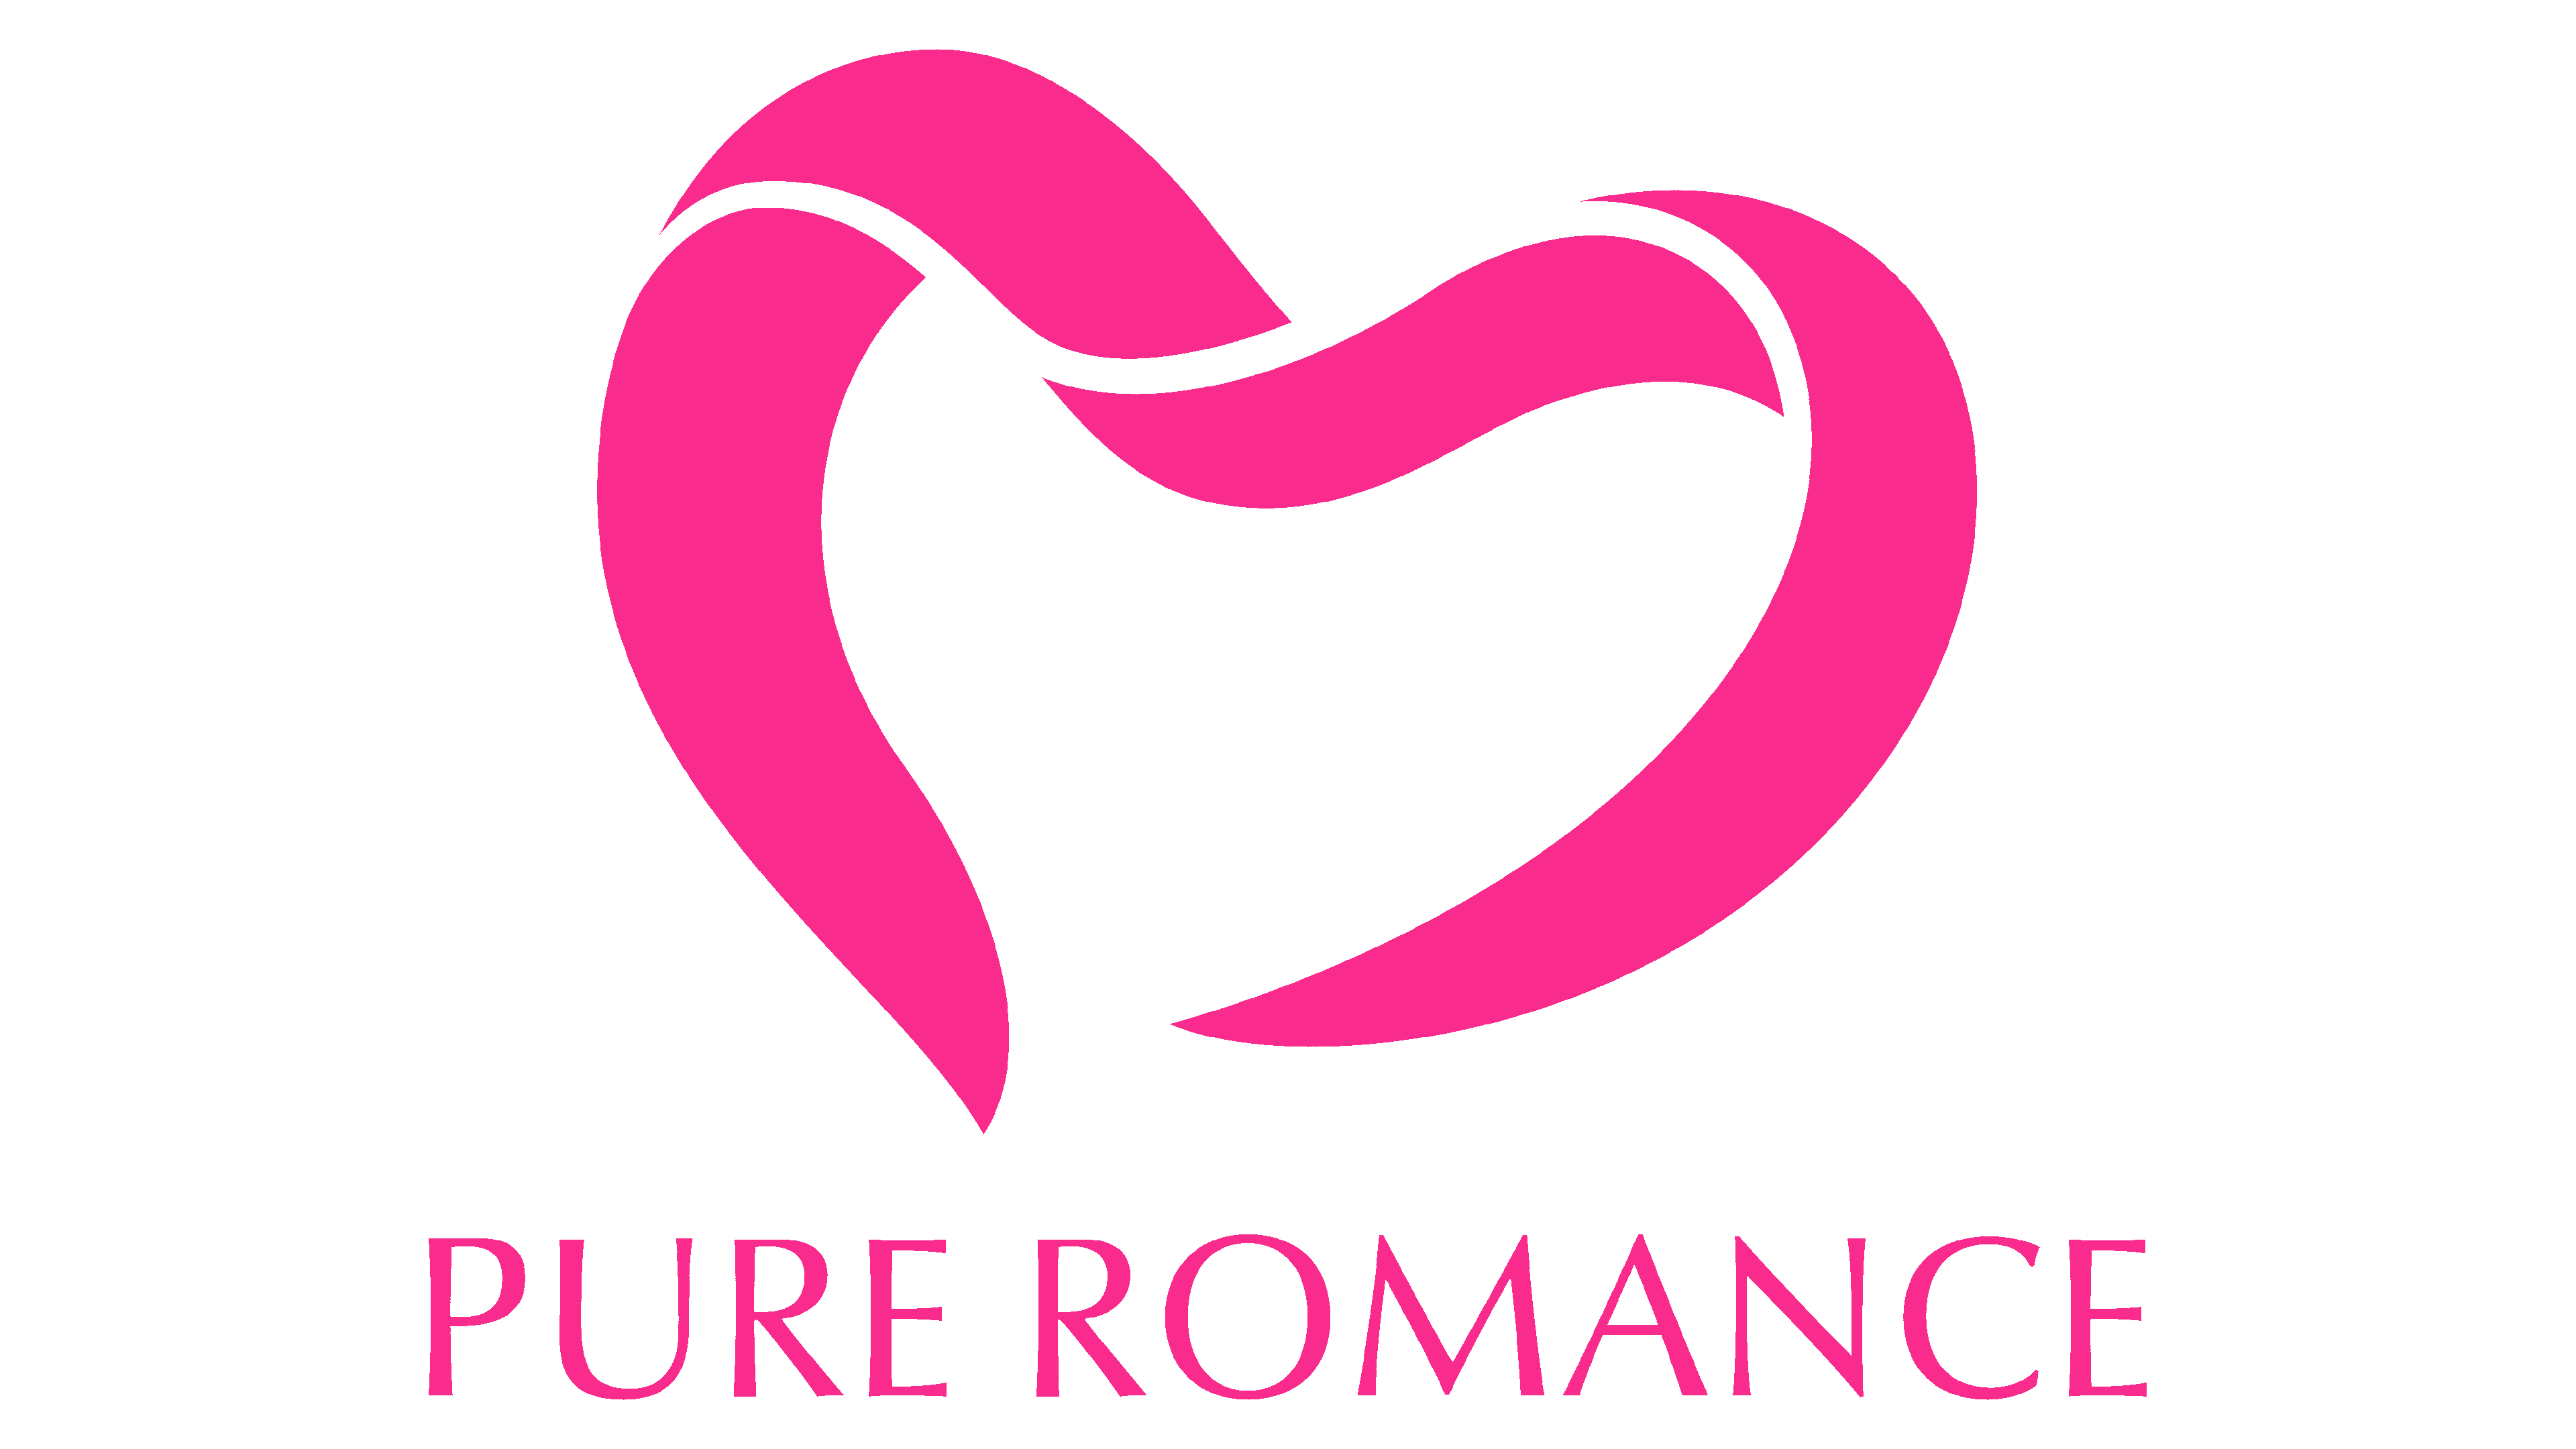 picsart download free love logo